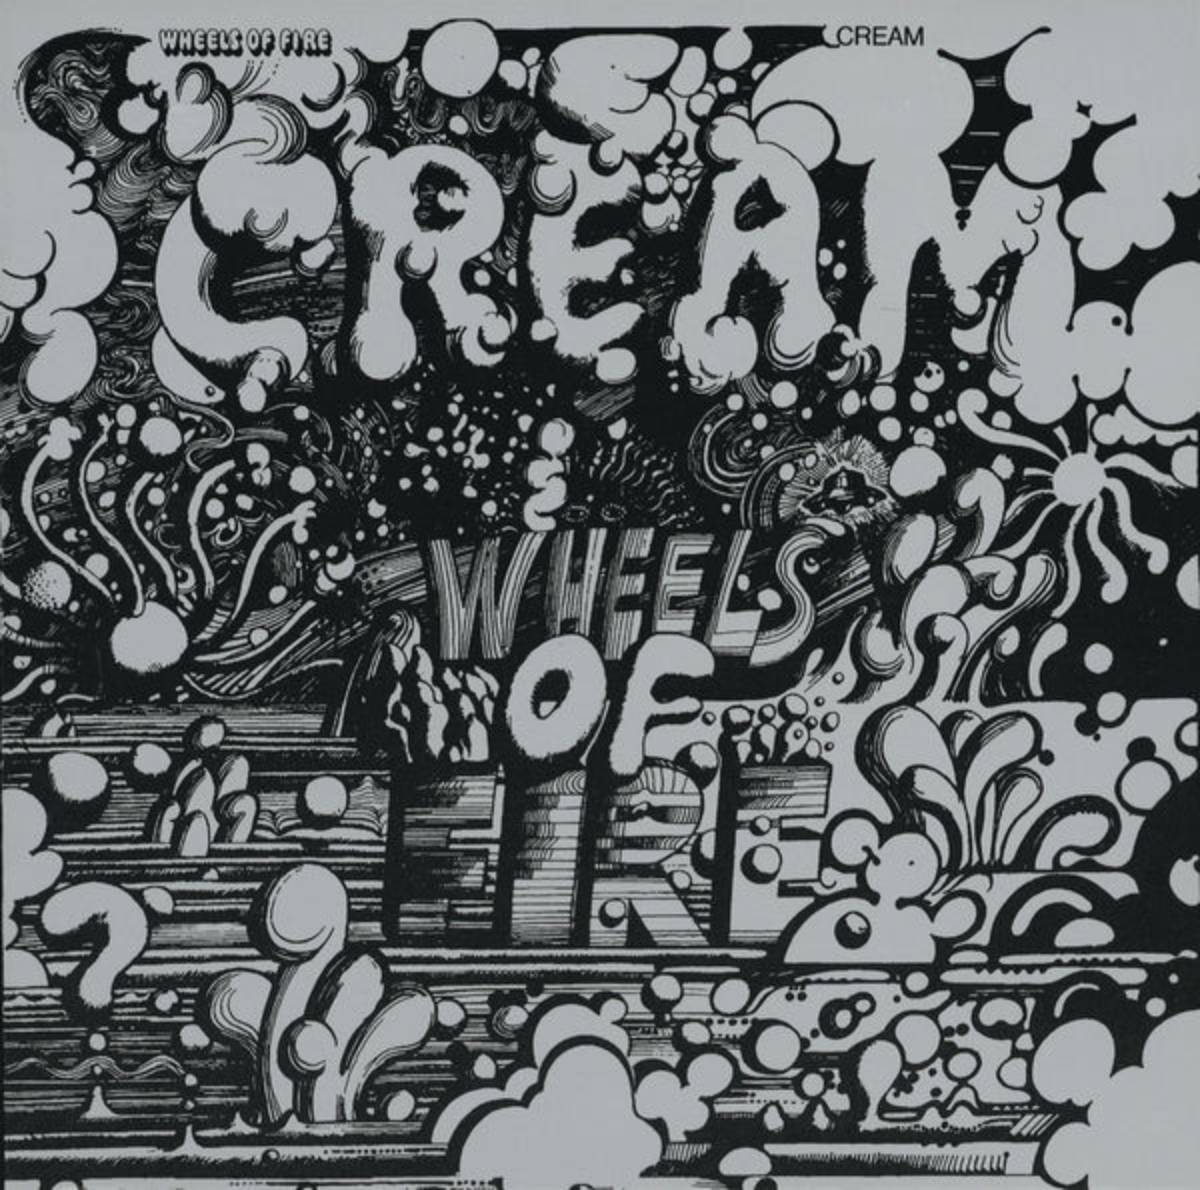 Cream – Wheels Of Fire (1968)